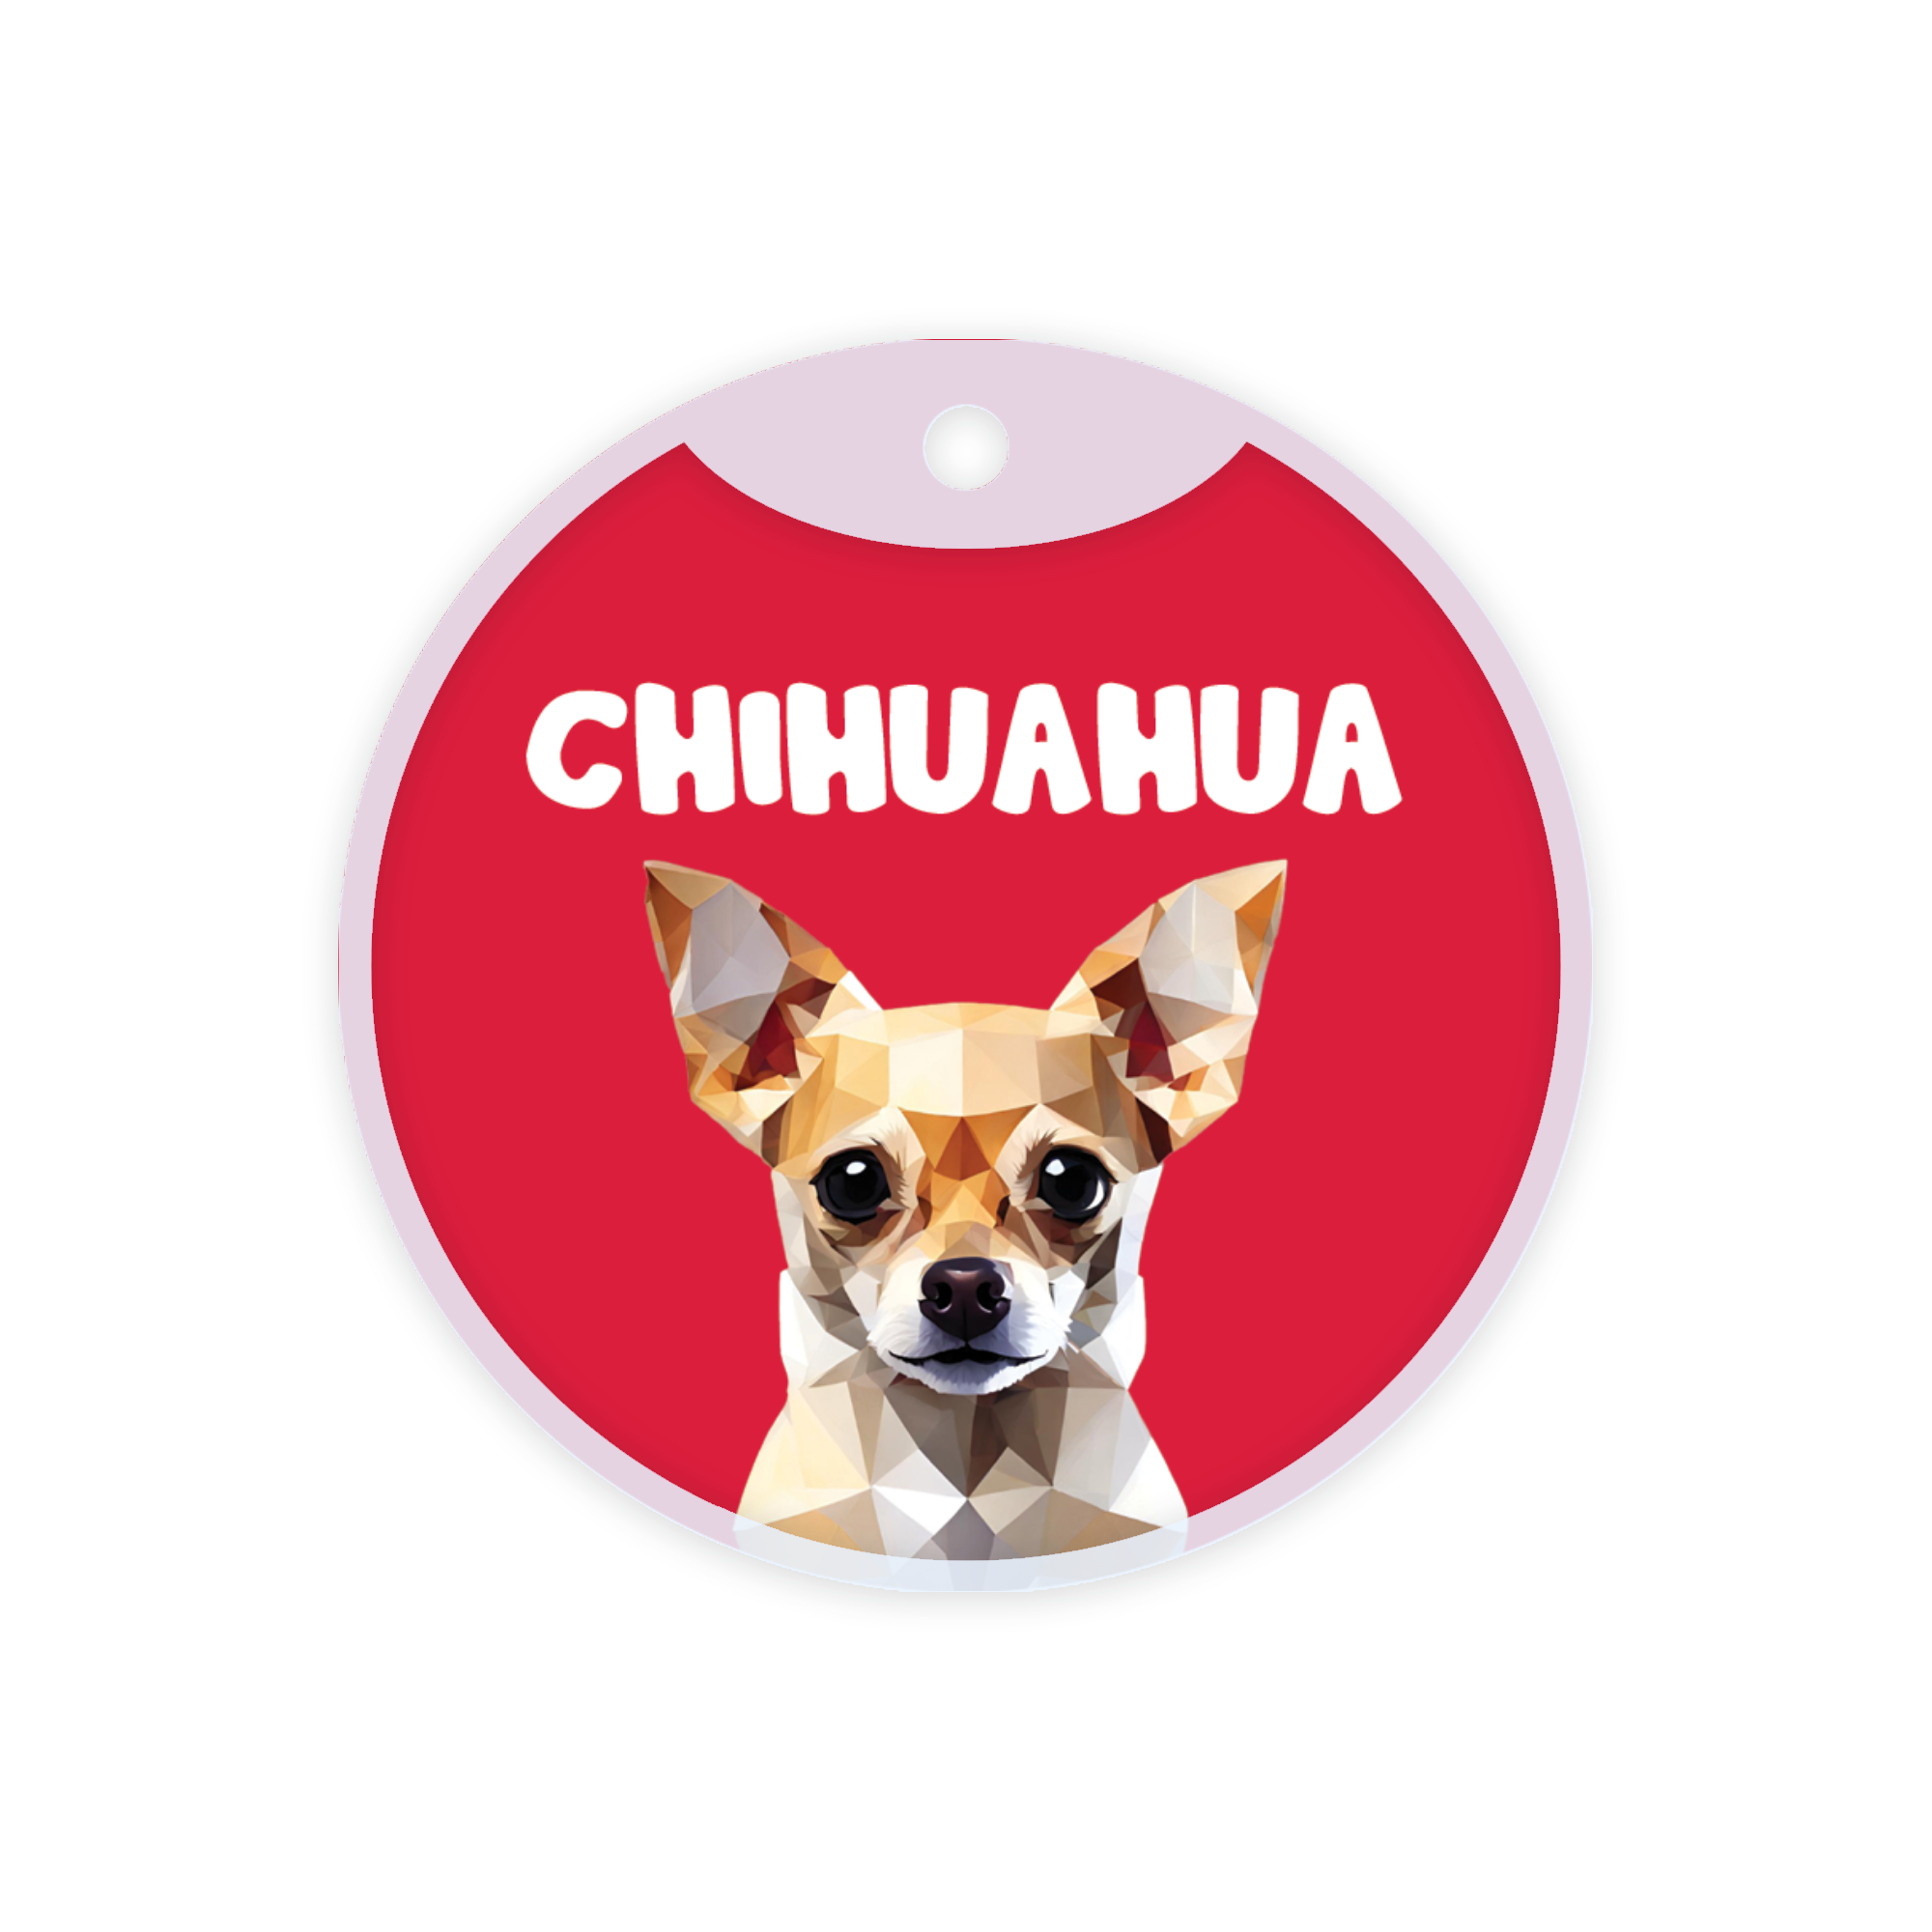 Customized Dog Id Tags - Chihuahua